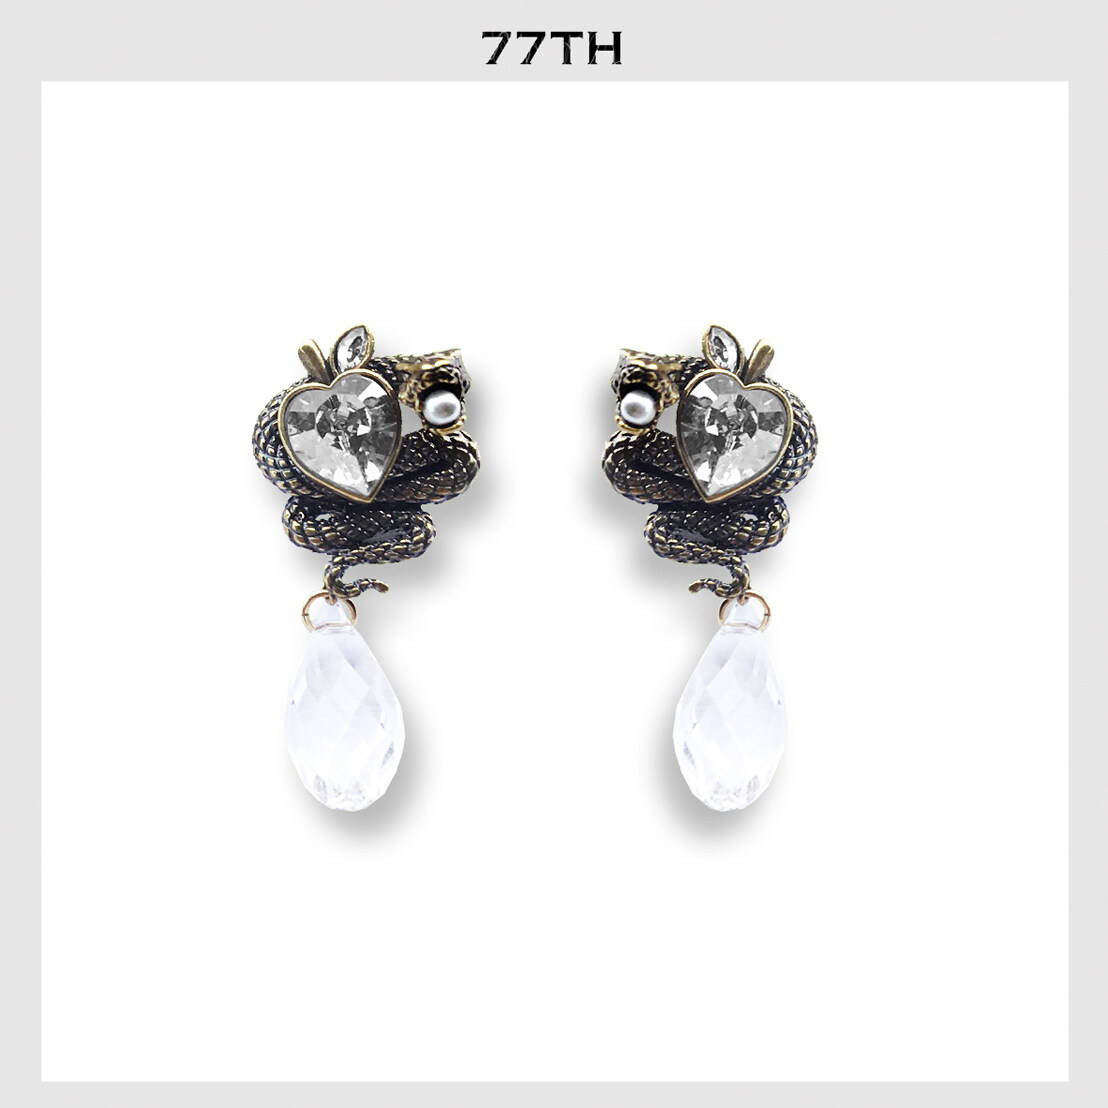 77th-sririta x 77th crystals from Swarovski collection serpent drop earrings smoke crystals gold ต่างหู ศรีริต้า x 77th คริสตัลสวรอฟสกี้  หยดน้ำ สีทอง